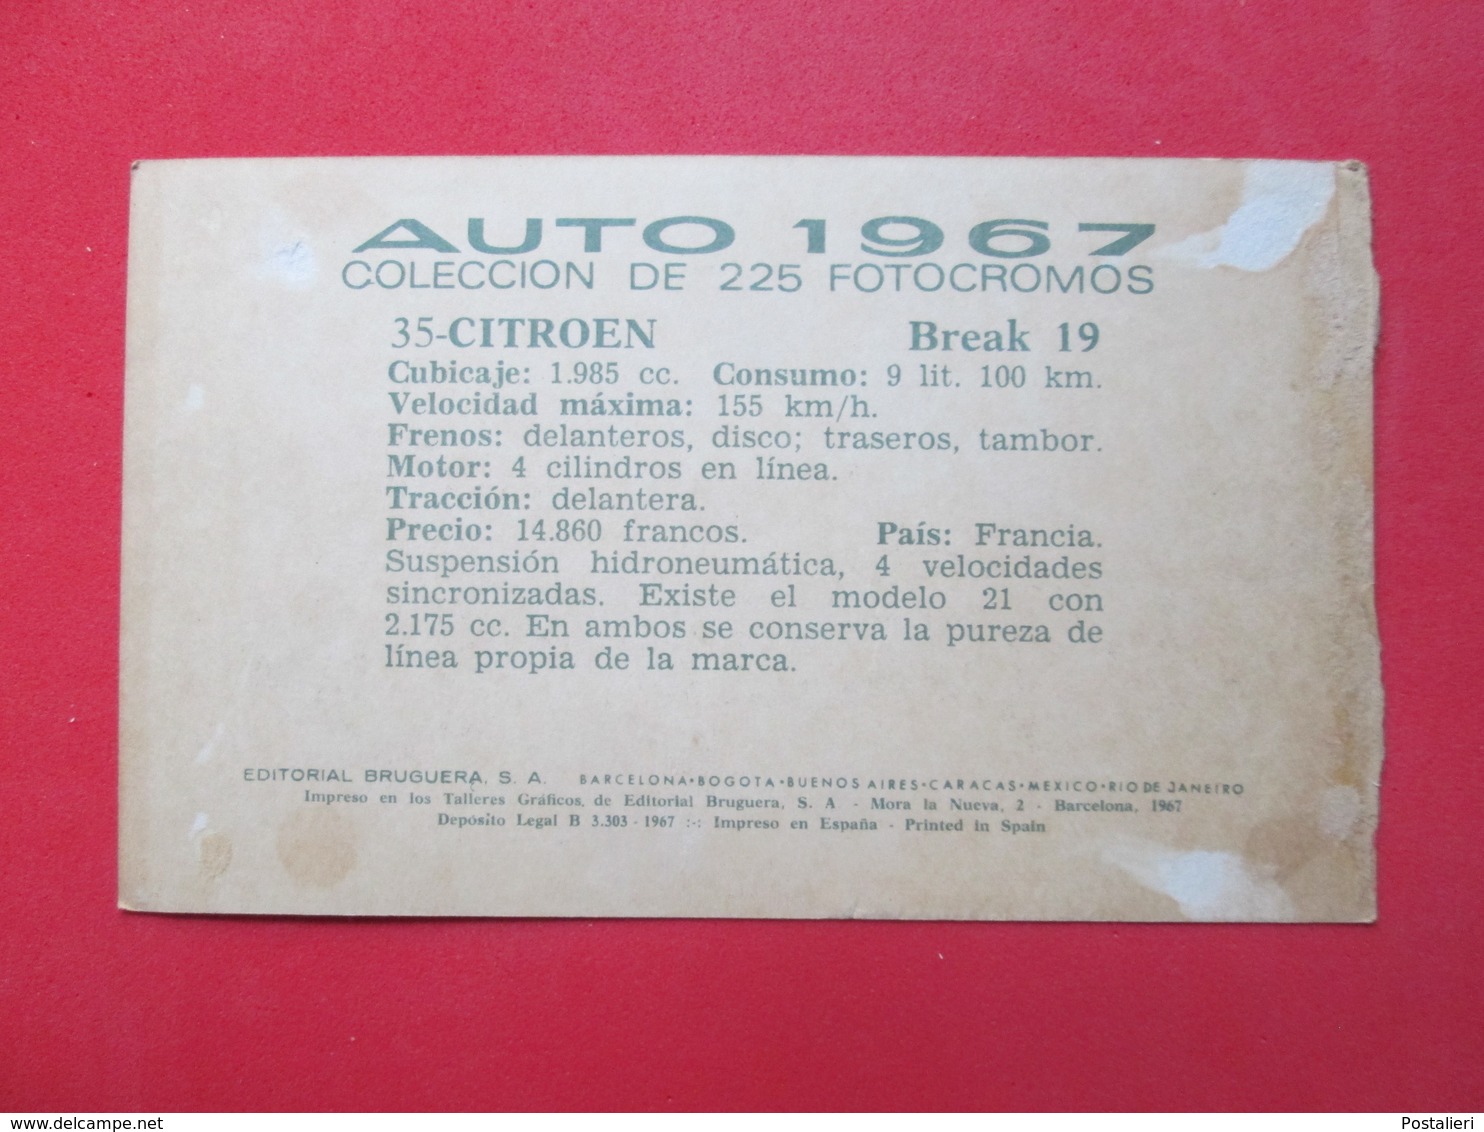 Trading Card (Cromo) - Citroën Break 19 - Nº 35 - Col. Autos 1967 - Ed. Bruguera 1967 - (Spain) / France - KFZ